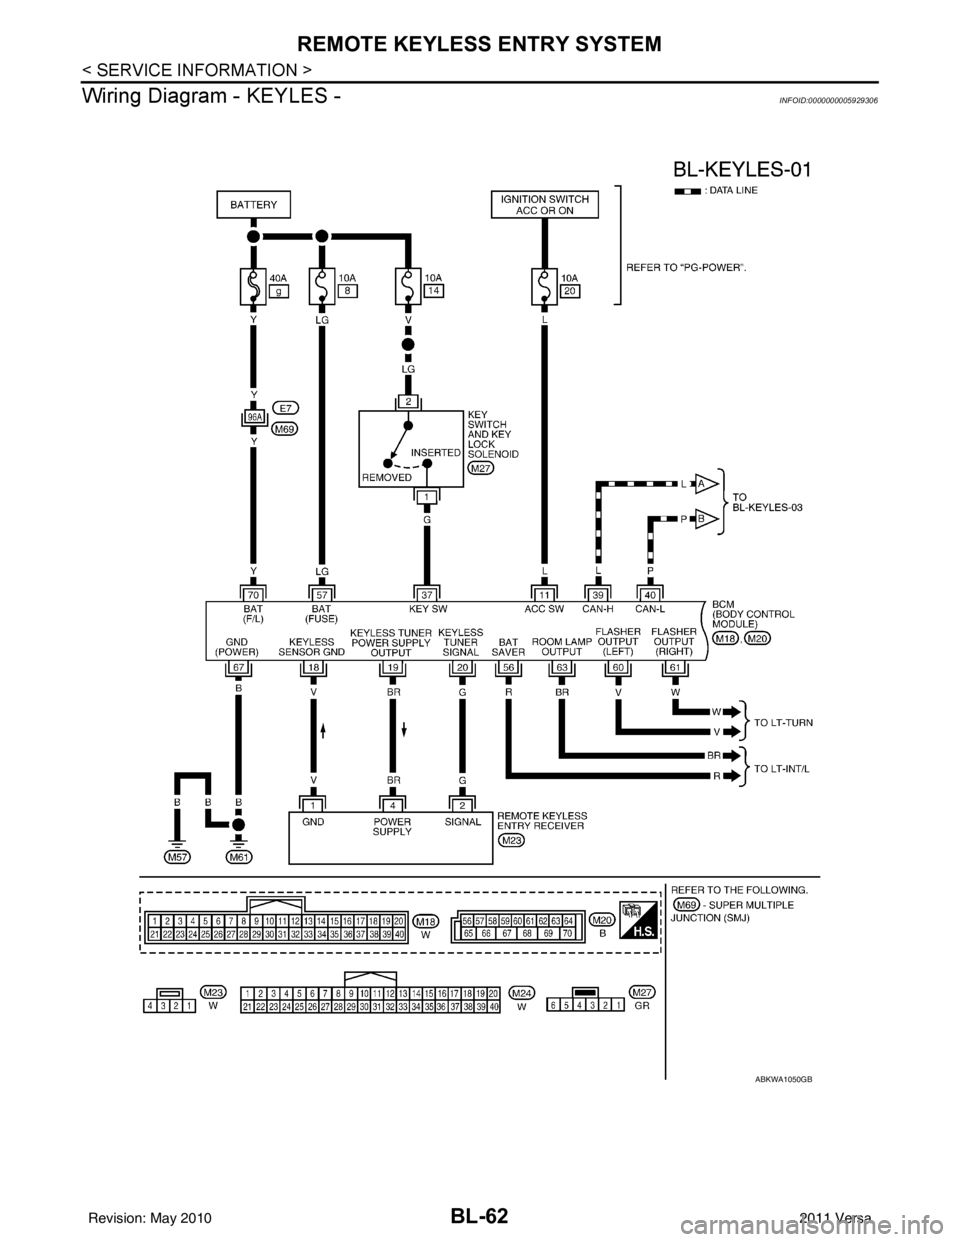 NISSAN LATIO 2011  Service Repair Manual BL-62
< SERVICE INFORMATION >
REMOTE KEYLESS ENTRY SYSTEM
Wiring Diagram - KEYLES -
INFOID:0000000005929306
ABKWA1050GB
Revision: May 2010 2011 Versa 